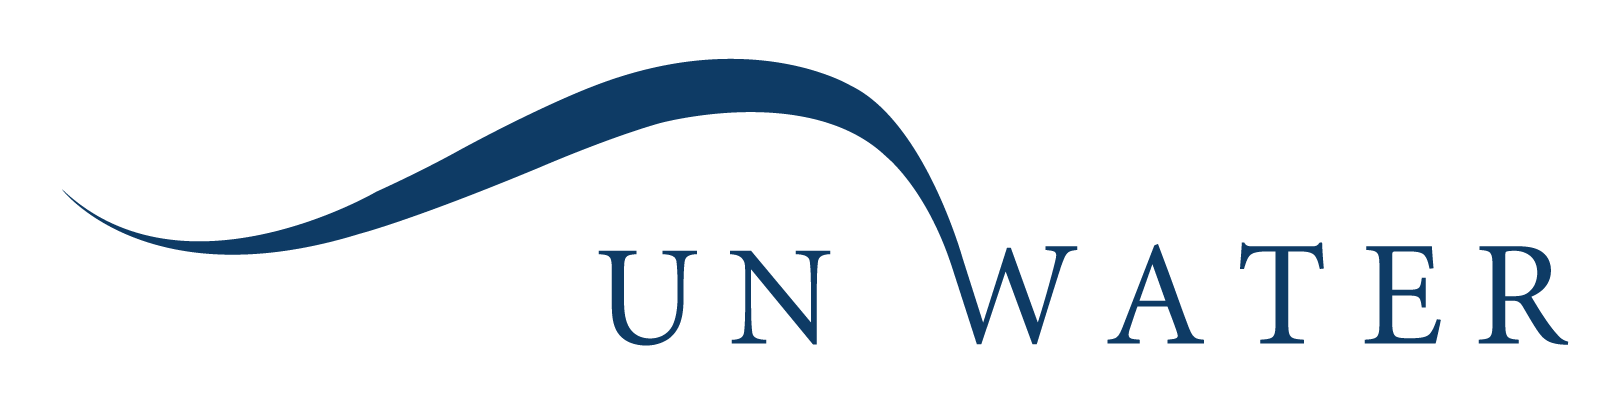 un water footer logo